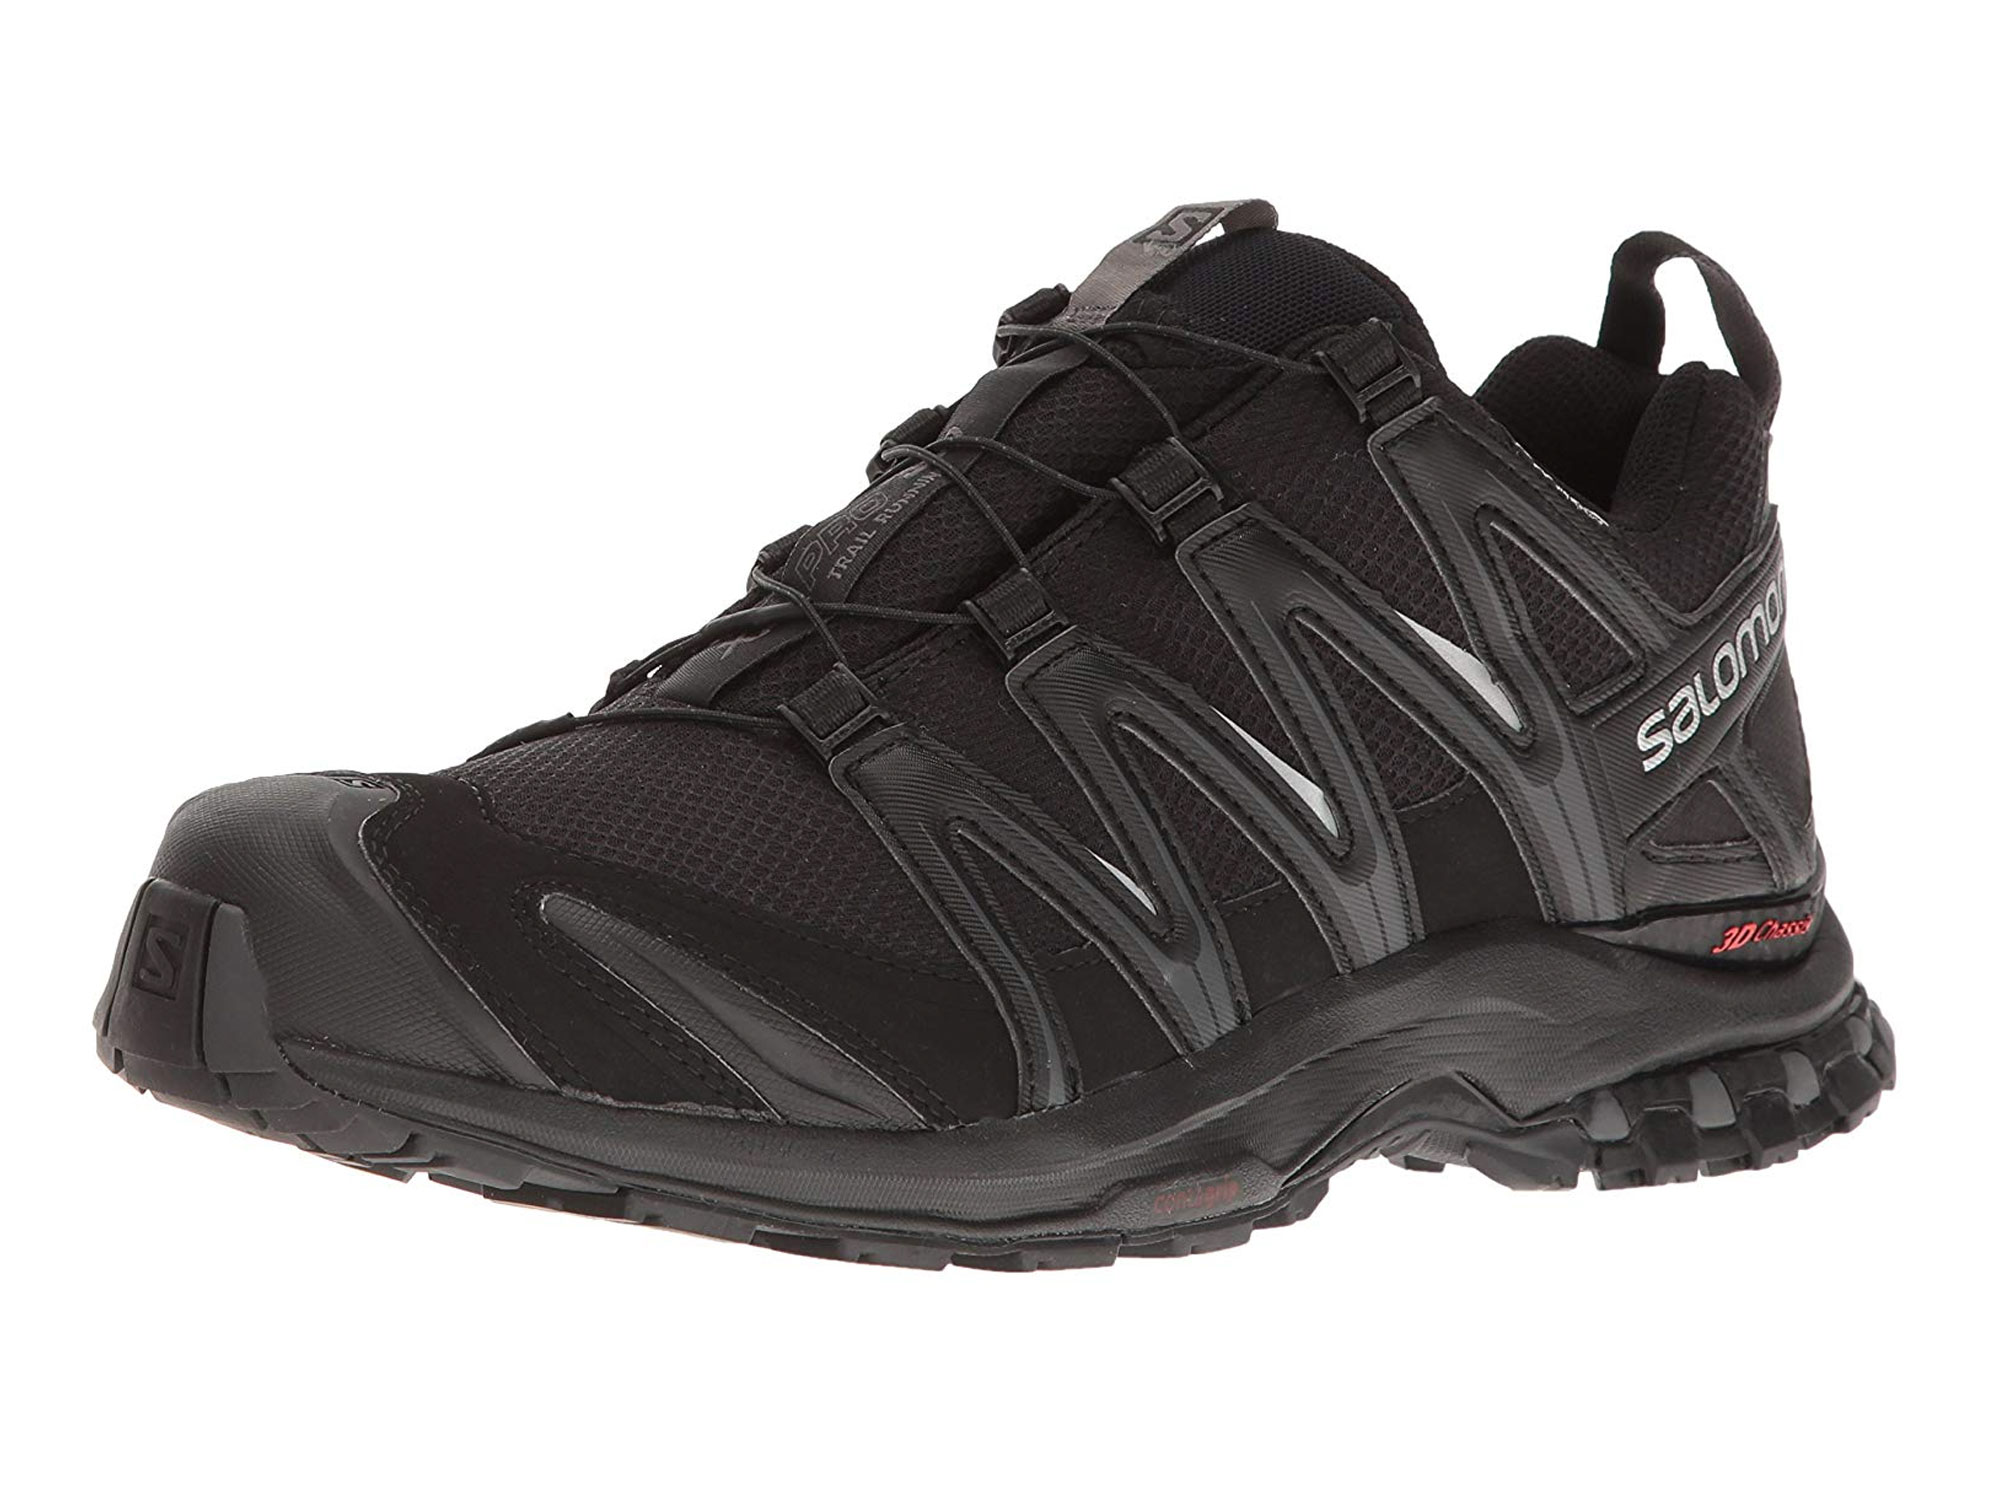 SALOMON Men's Xa Pro 3D Cs Wp Trail Running Shoes